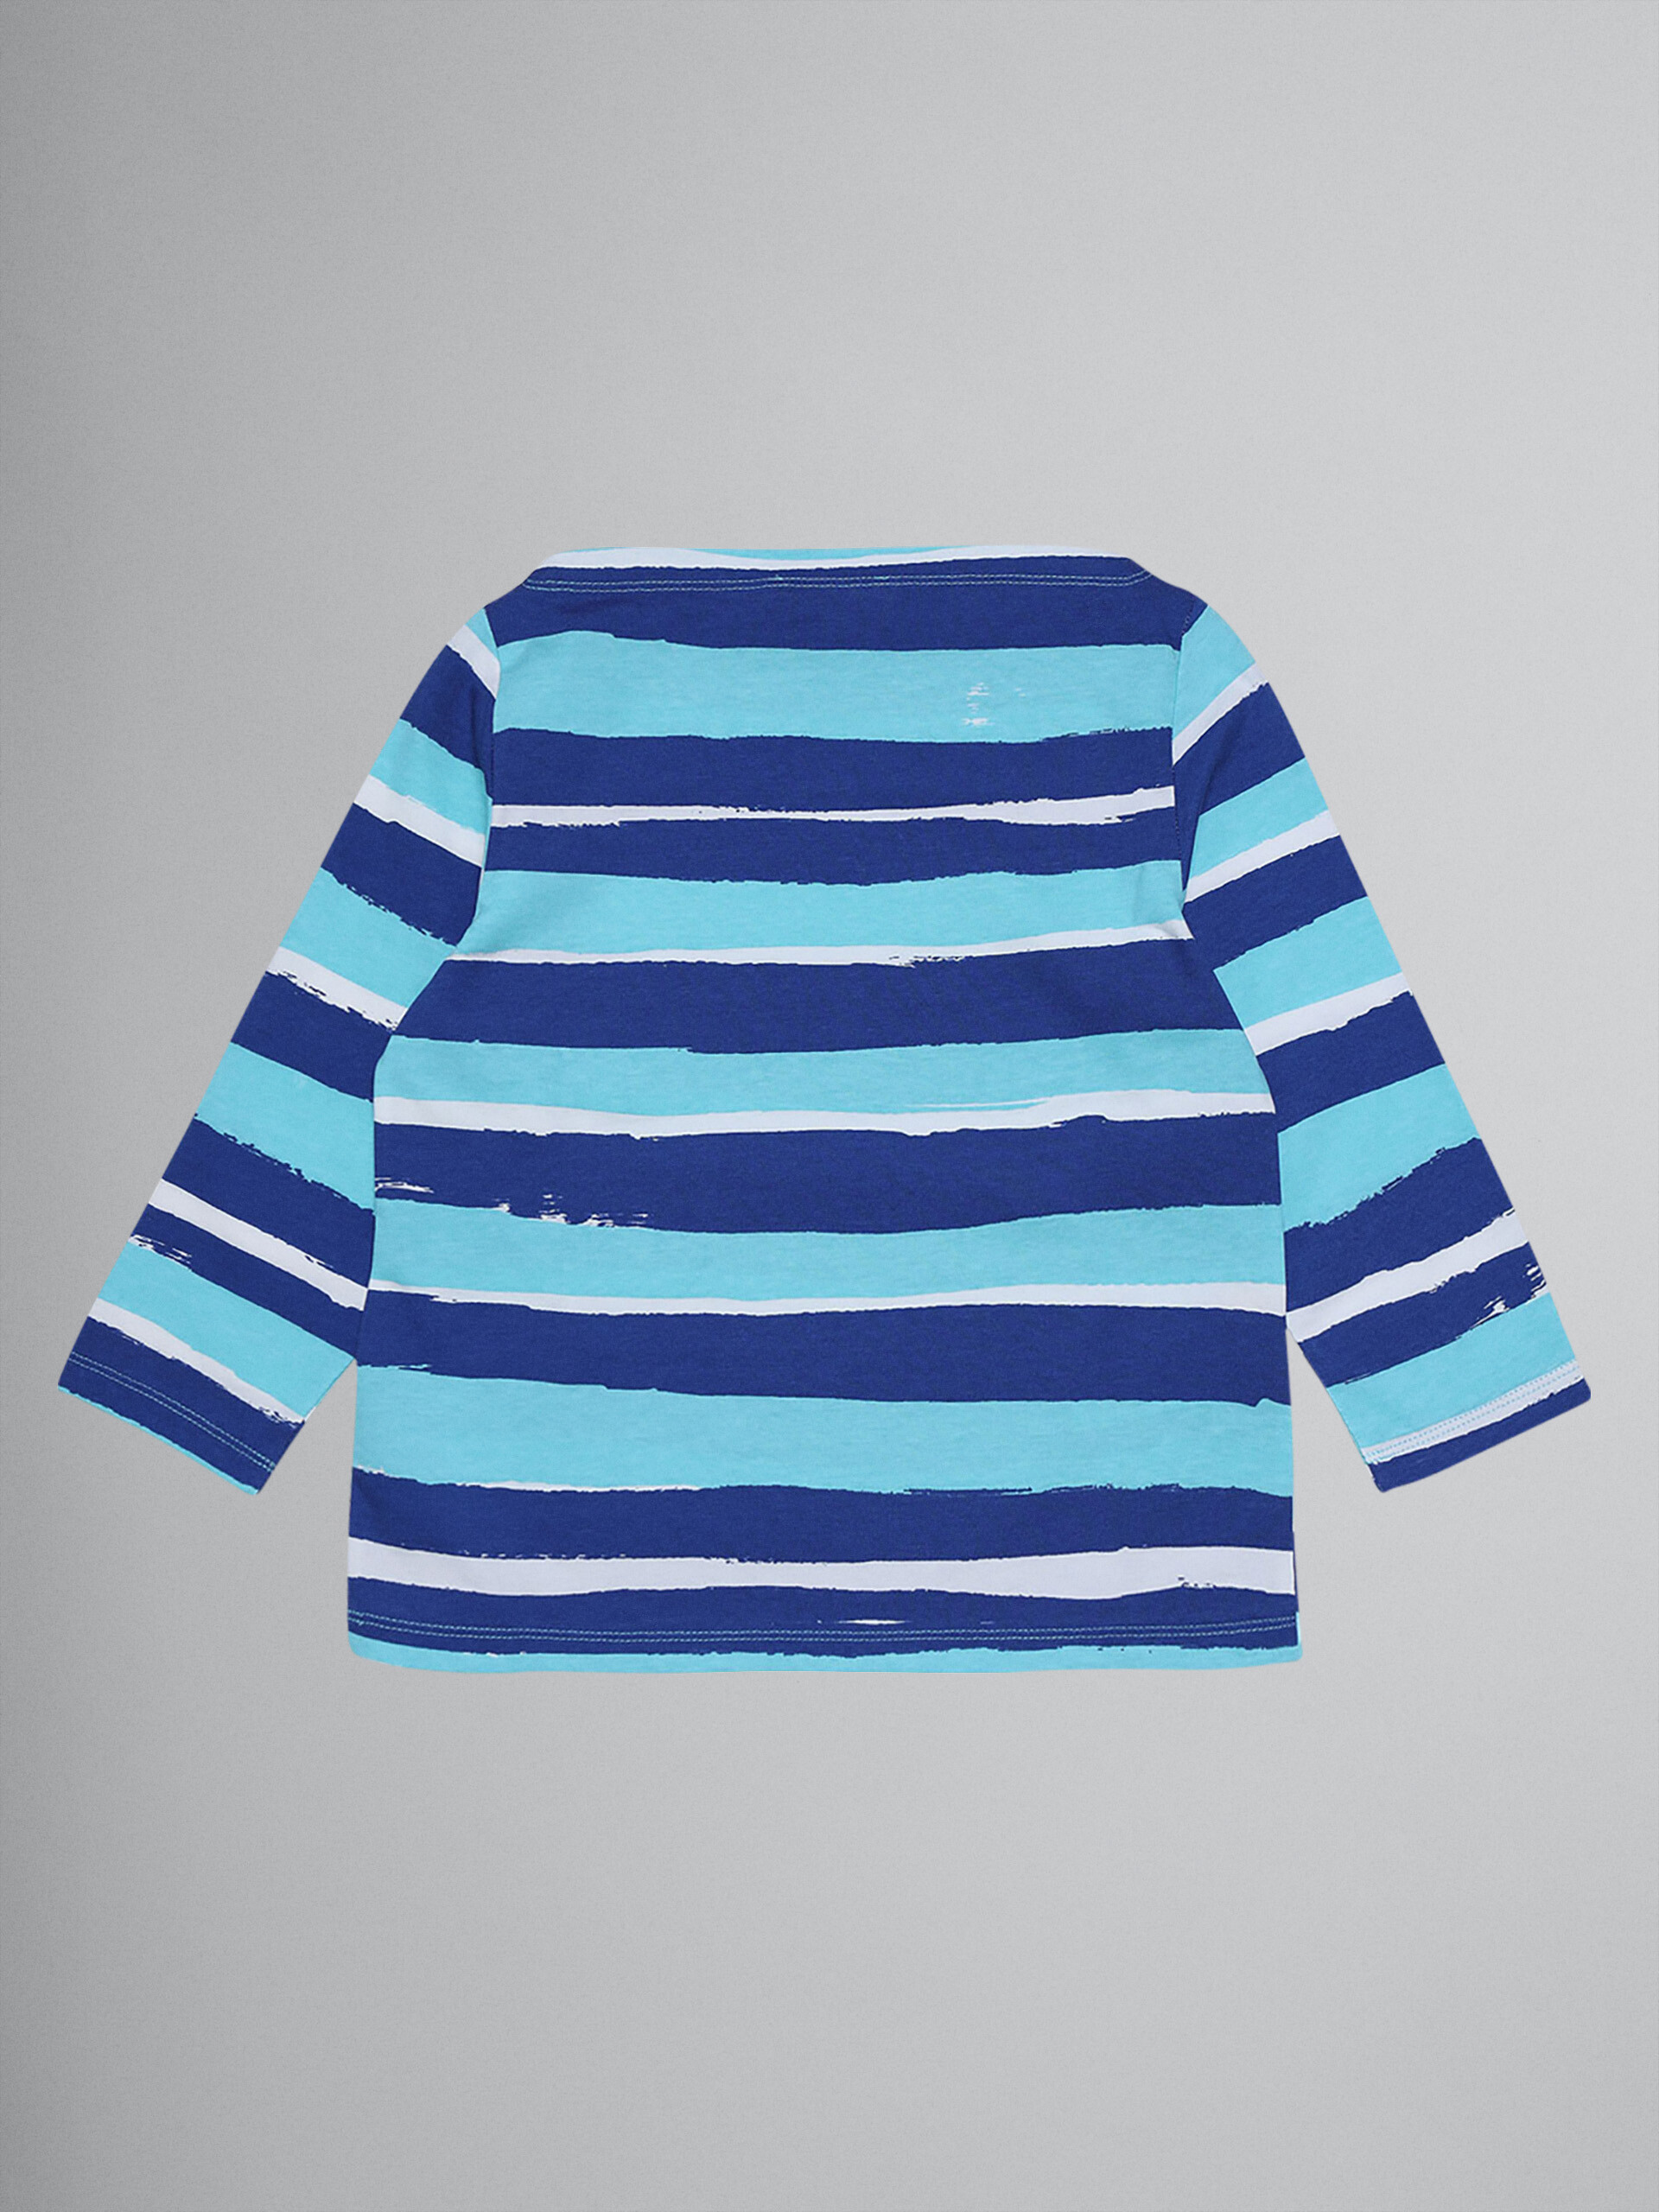 Stripe print cotton jersey T-shirt - T-shirts - Image 2